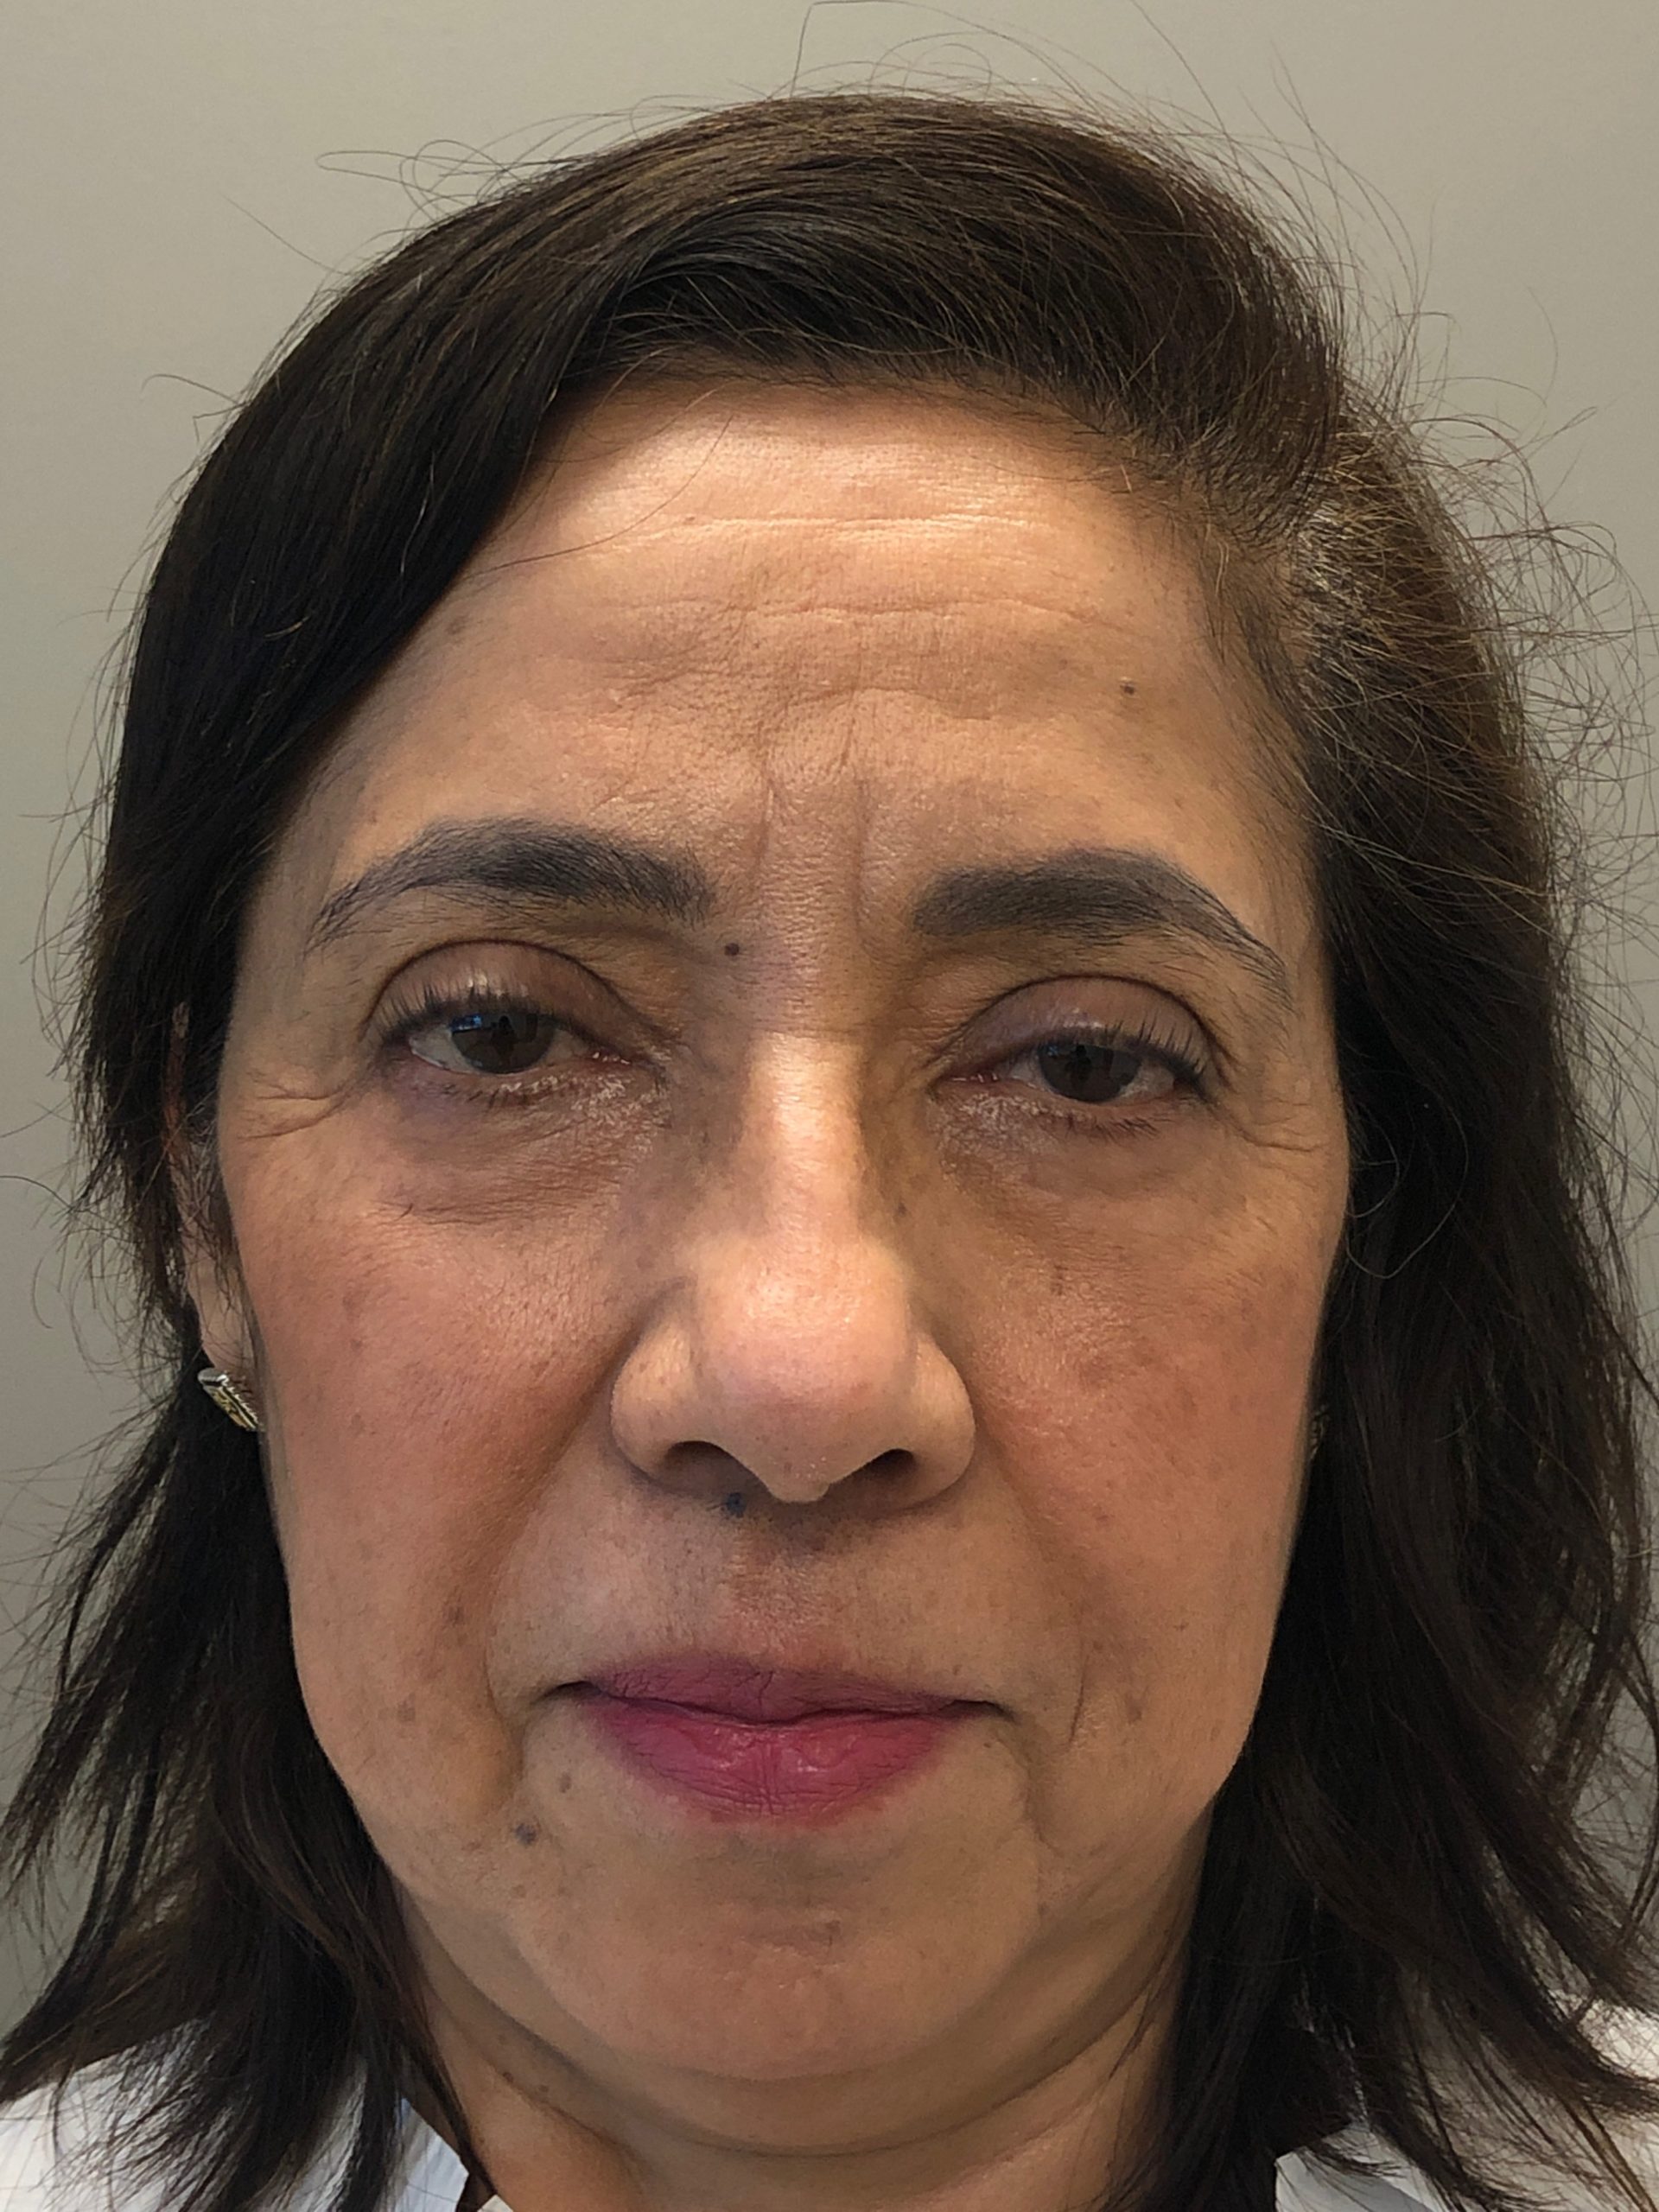 Eyelid Surgery (Blepharoplasty) Before &#038; After Photos